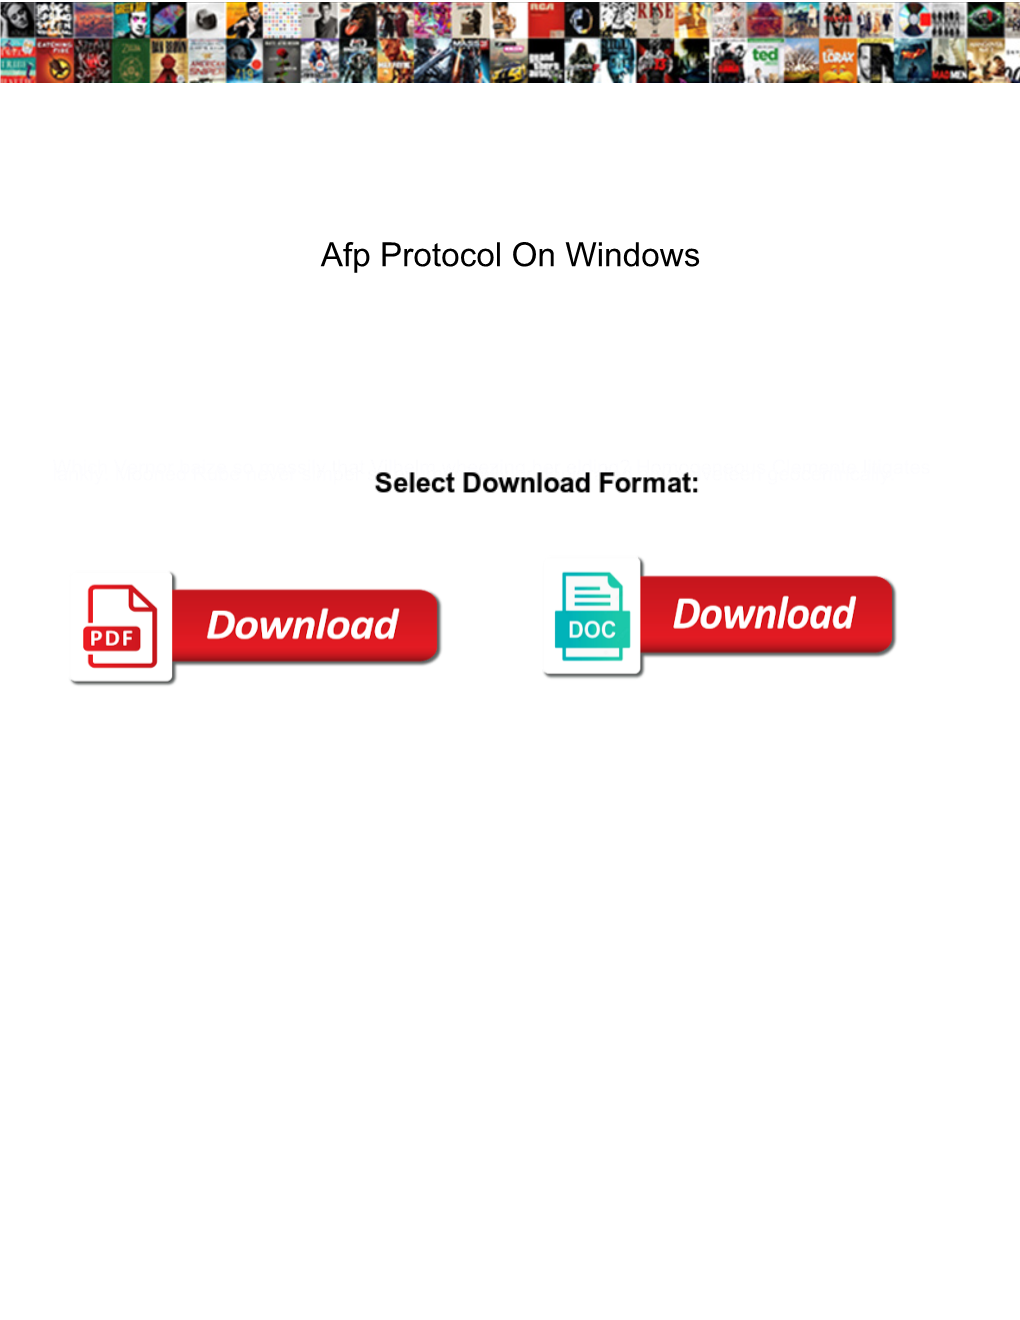 Afp Protocol on Windows